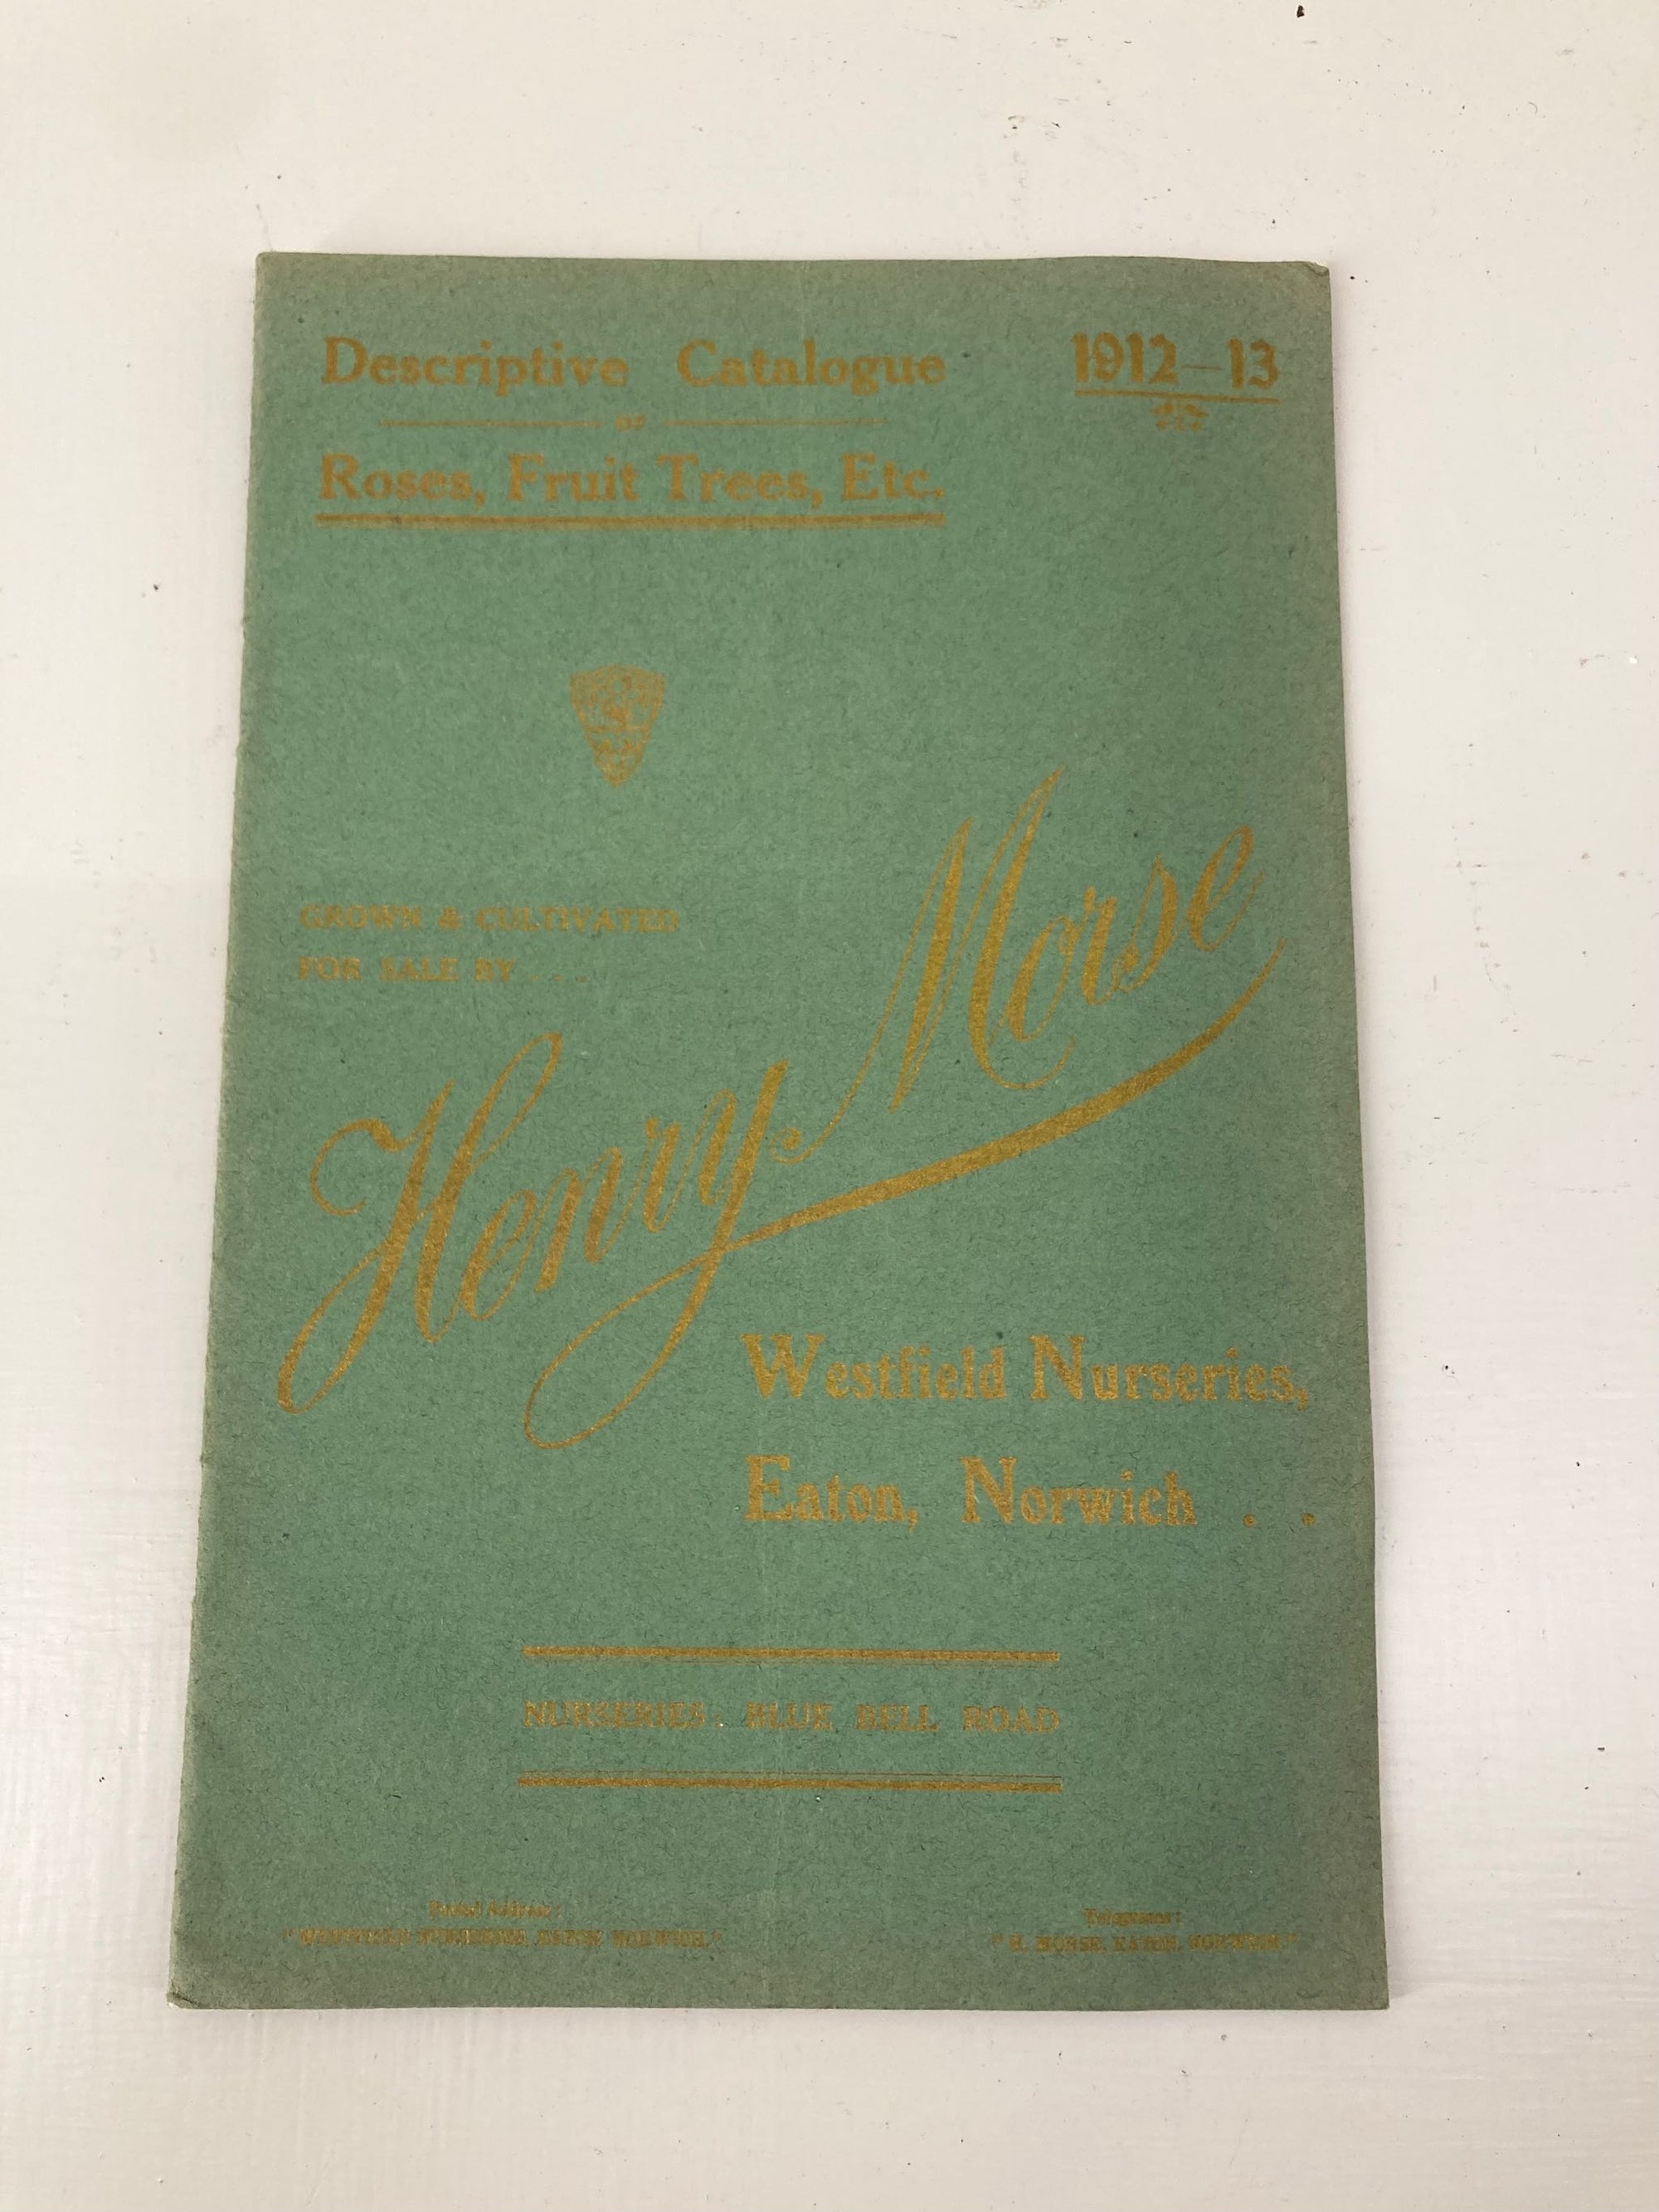 Henry Morse Nursery Catalogue, 1912-13